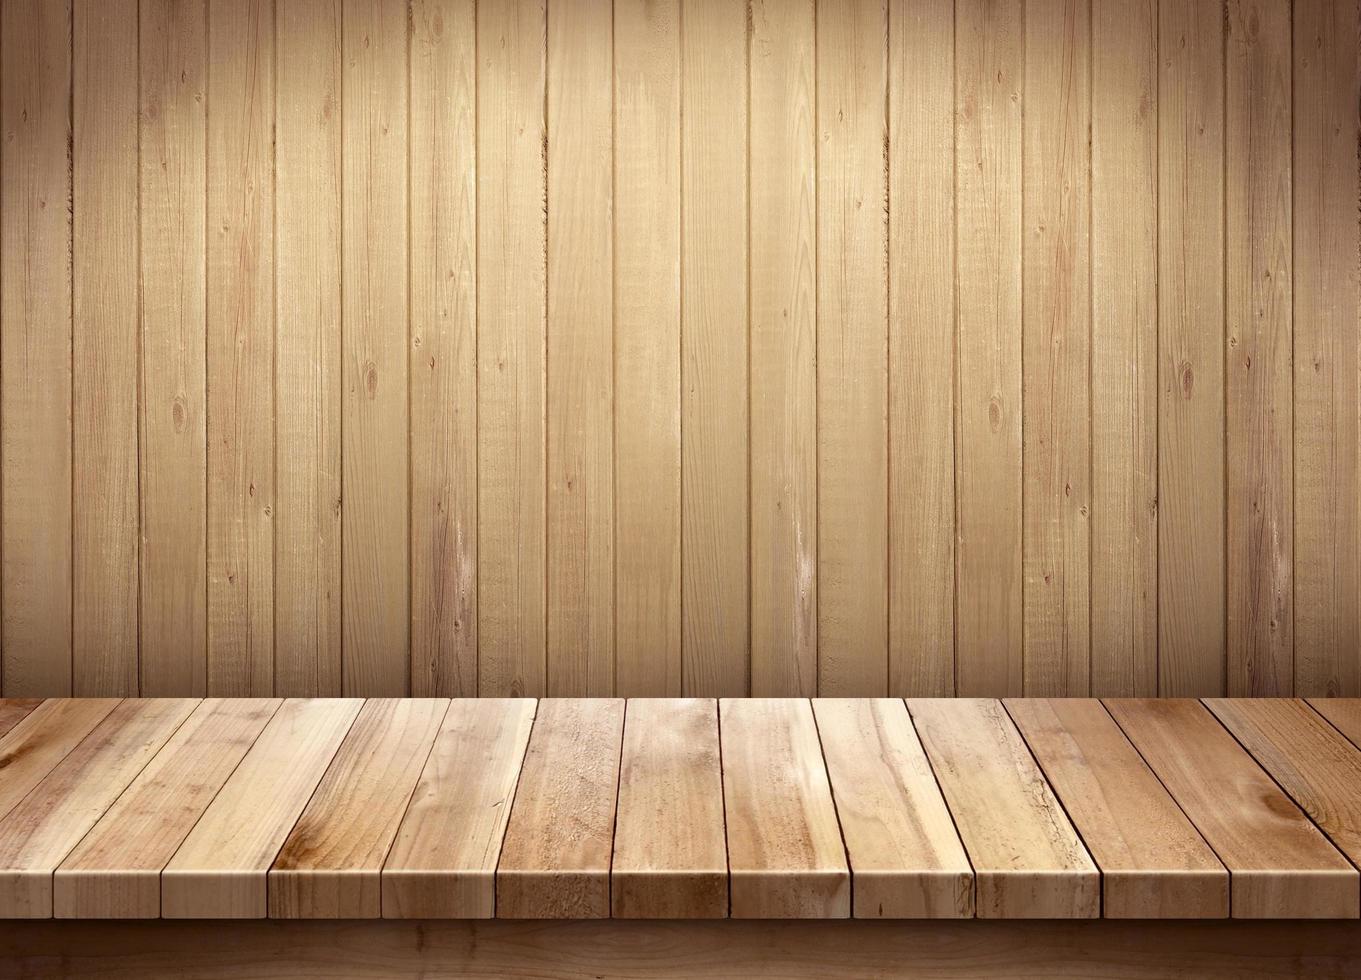 mesa de madera con fondo interior rústico 1739437 Foto de stock en Vecteezy